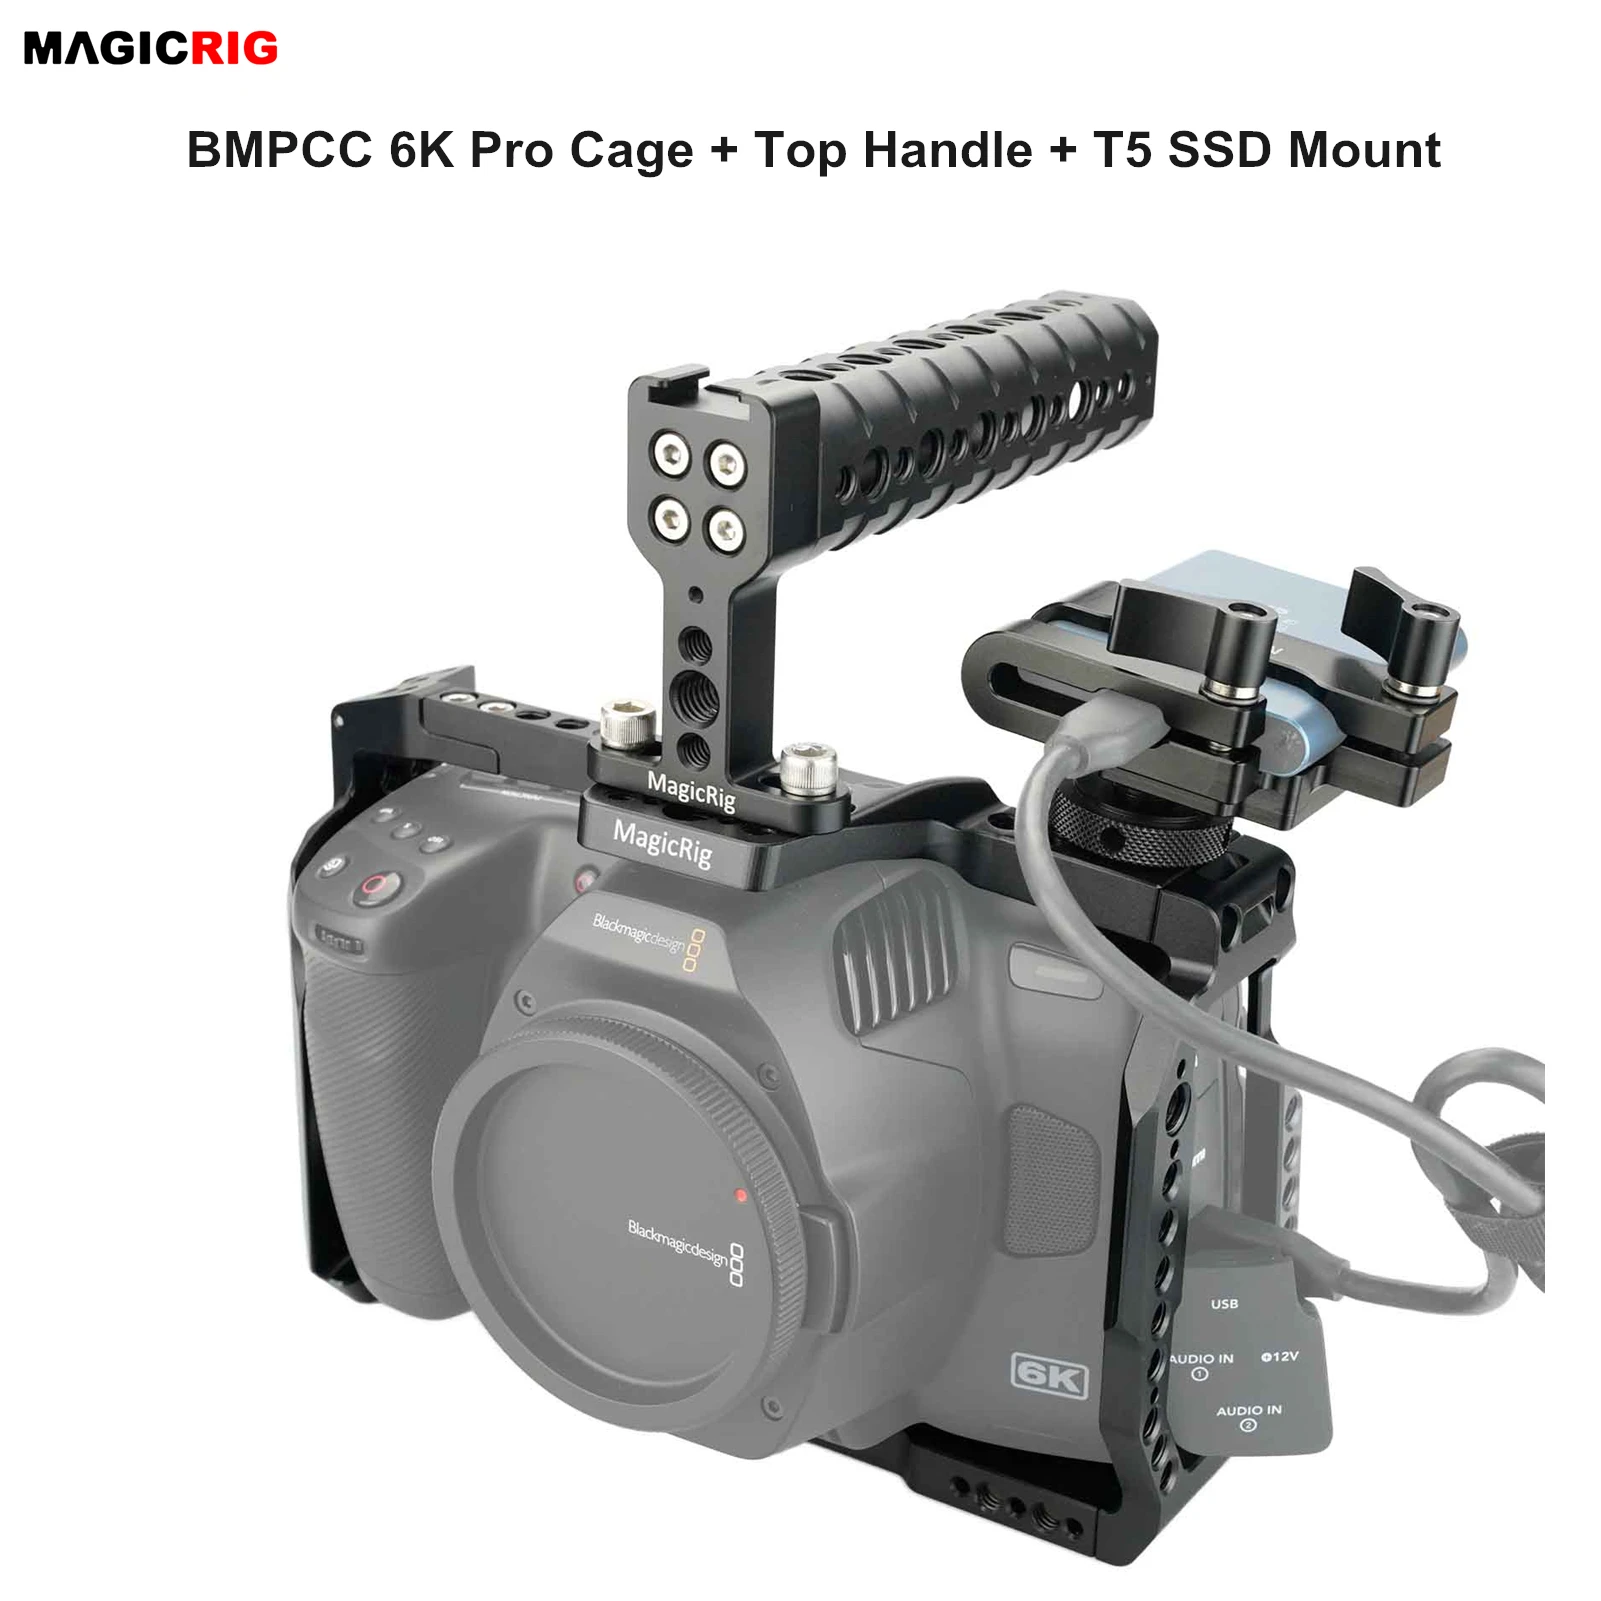 MAGICRIG BMPCC 6K Pro Cage with Top Handle Grip + T5 SSD Holder for Blackmagic Design Pocket Cinema Camera 6K Pro / 6K G2 enlarge